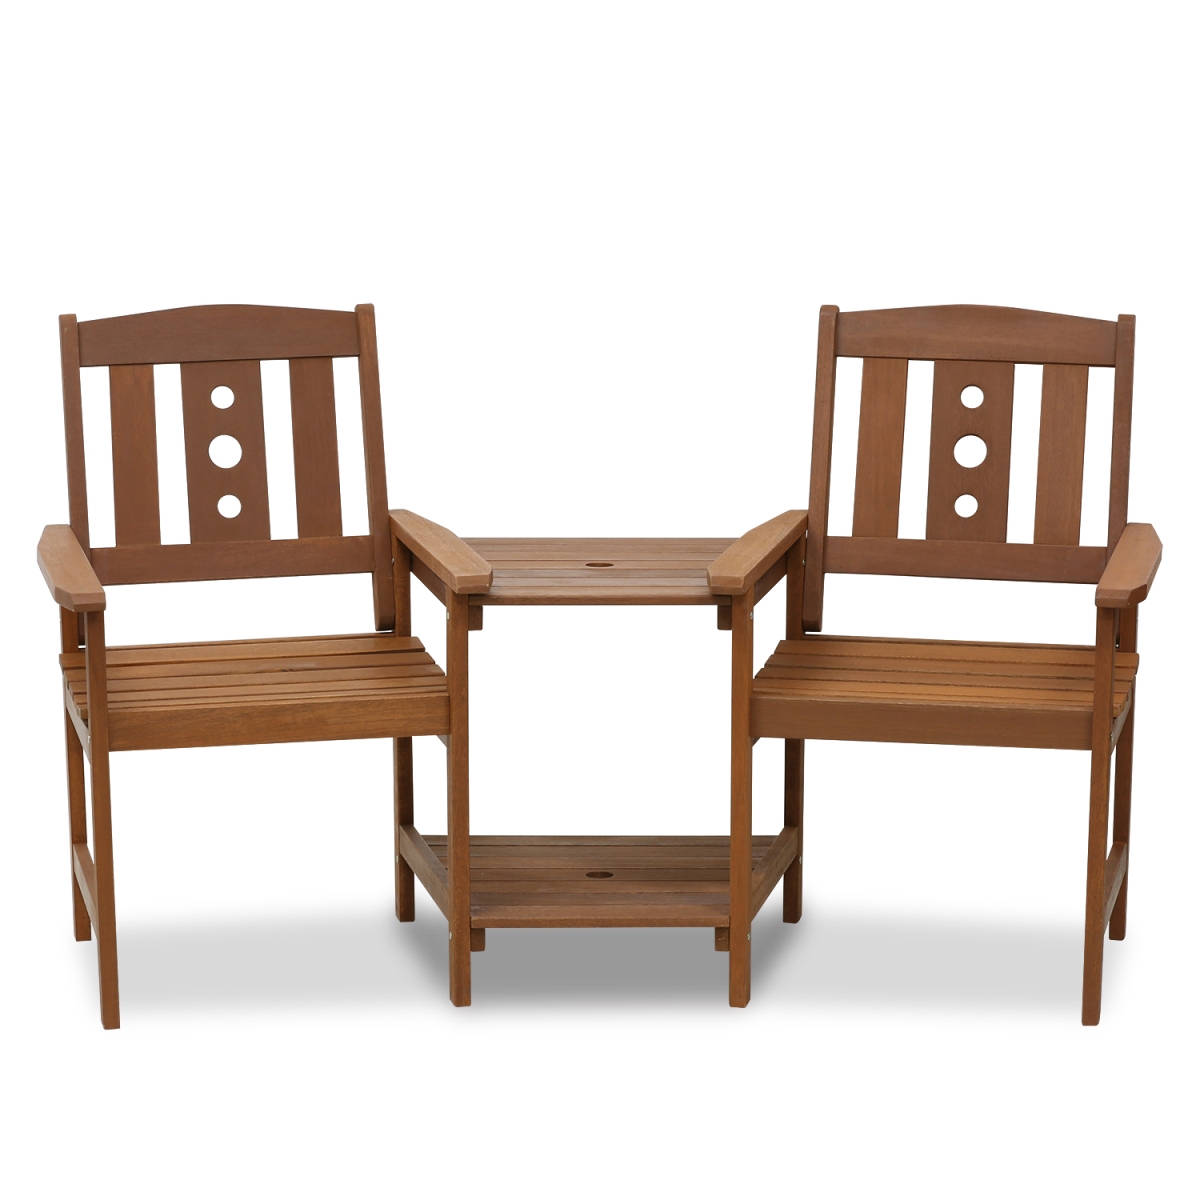 Tioman Outdoor Hardwood Jack & Jill Chair Set